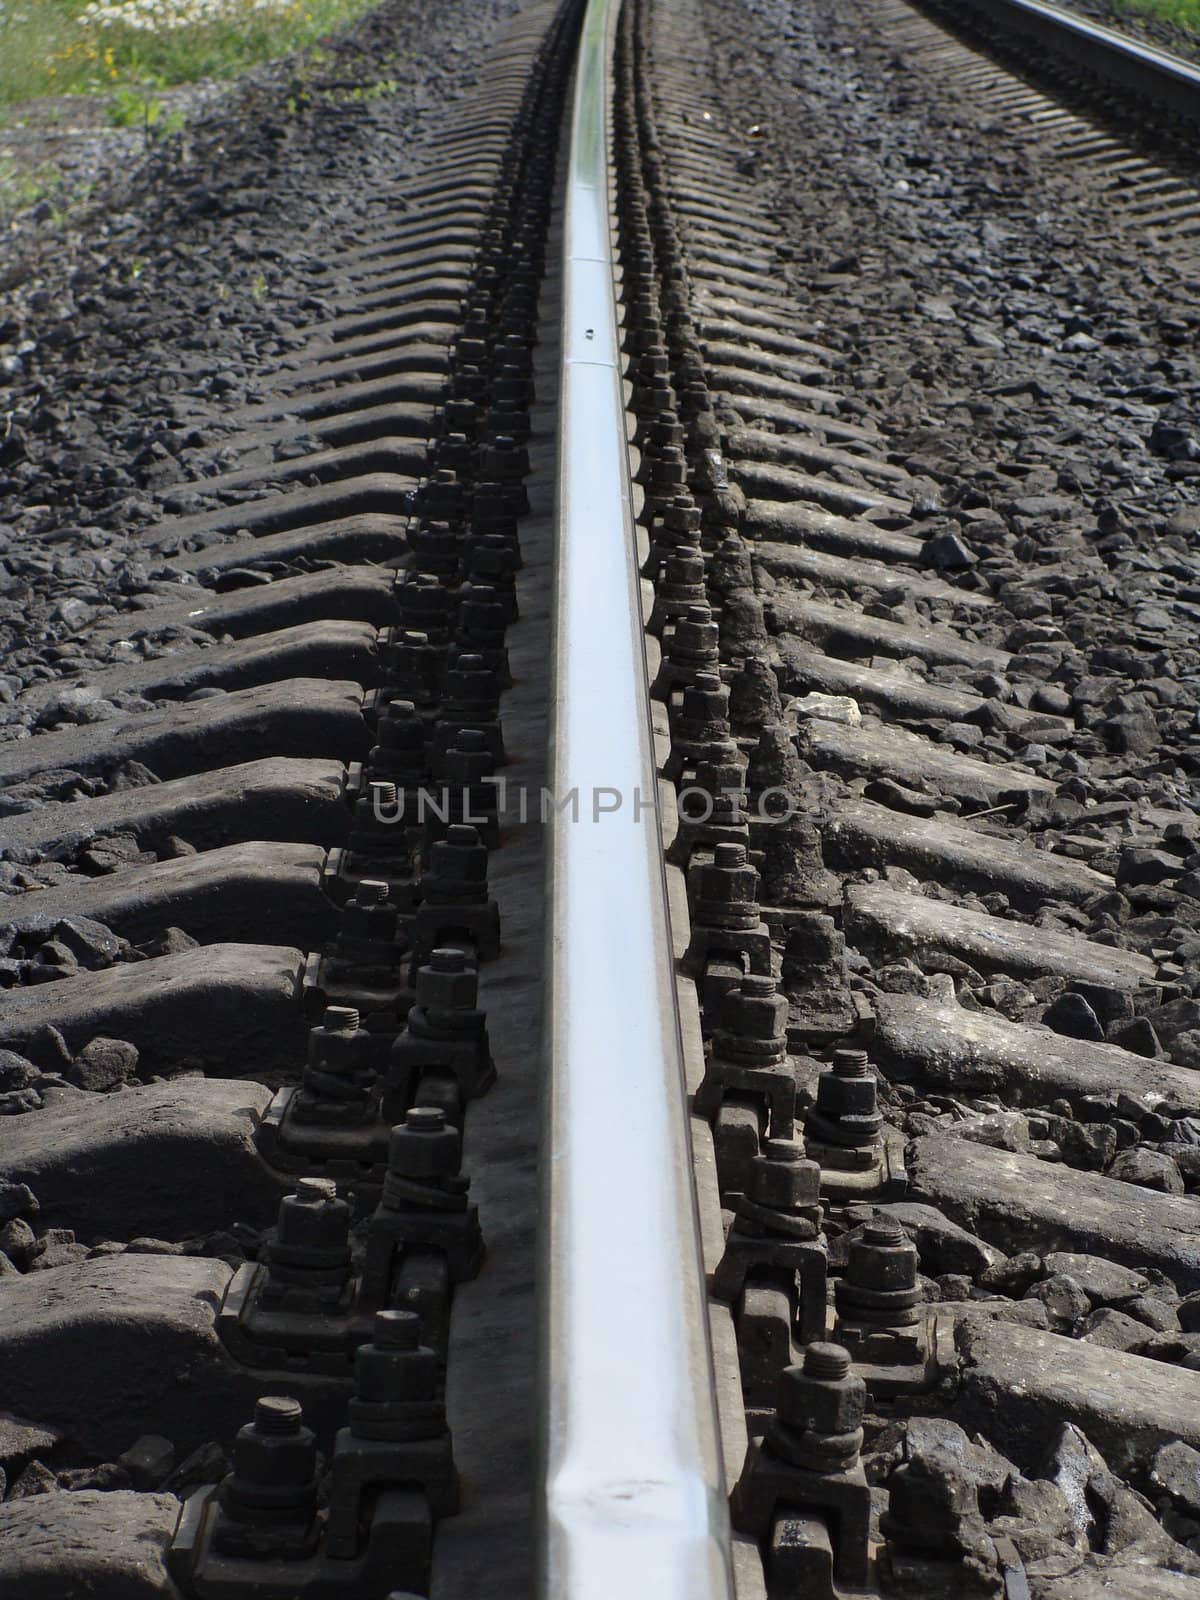 The railway, details: rails, cross ties, bolts 